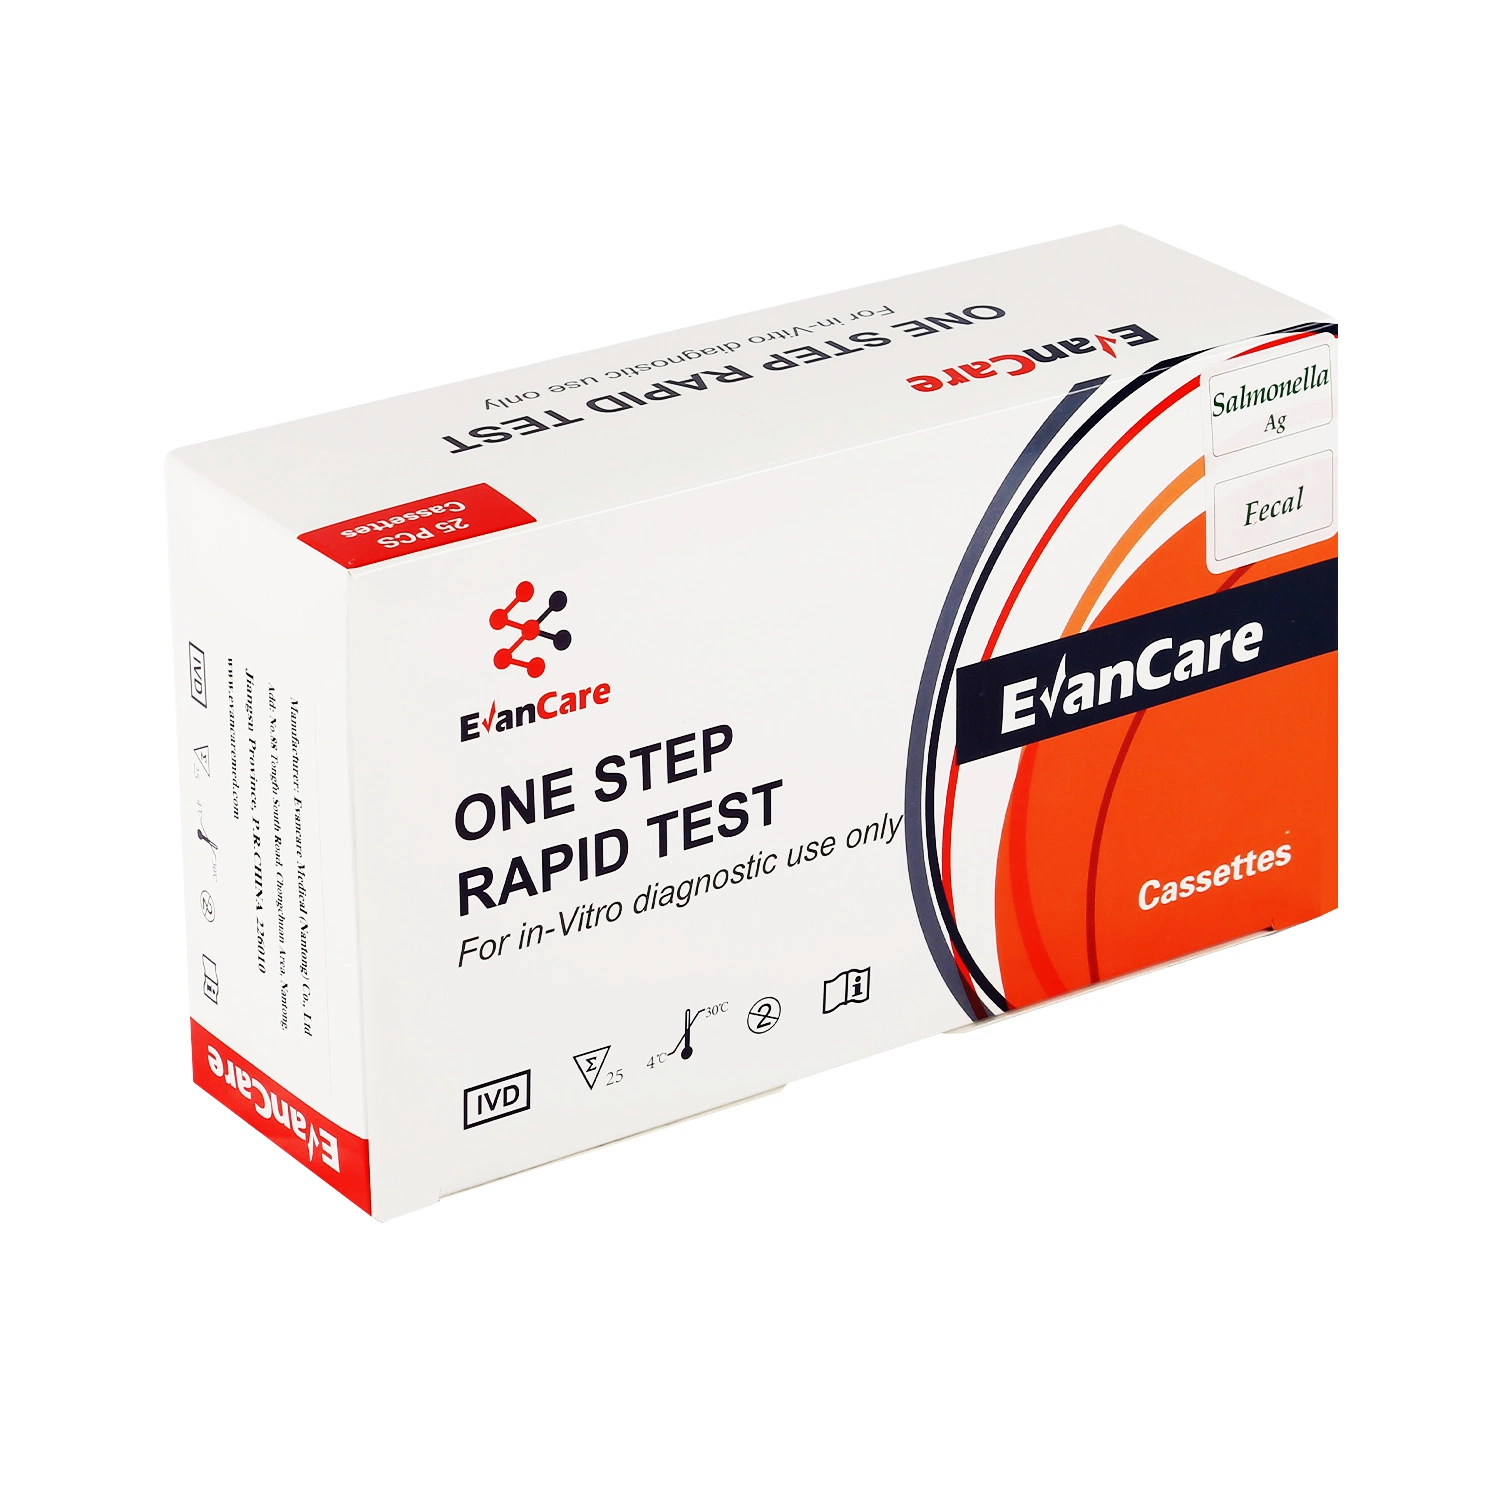 Evancare Test Salmonella High Accurate Rapid Test Kit Salmonella Typhoid Antigen Rapid Test Kit